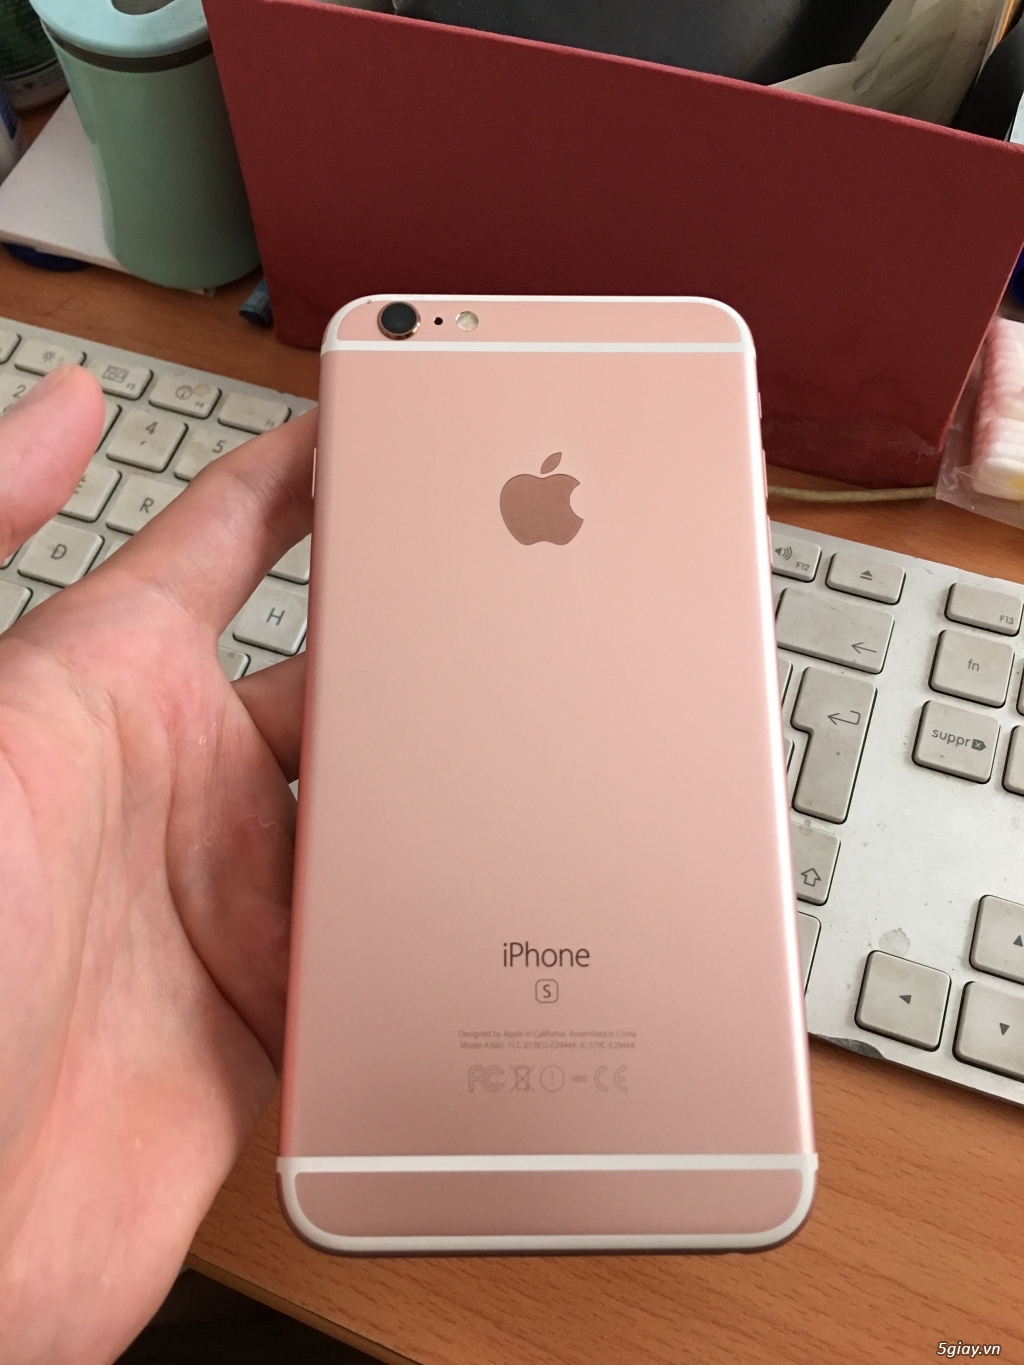 Iphone 6s Plus 16gb Rose gold nguyên zin 99% BH 5/2017 - 2